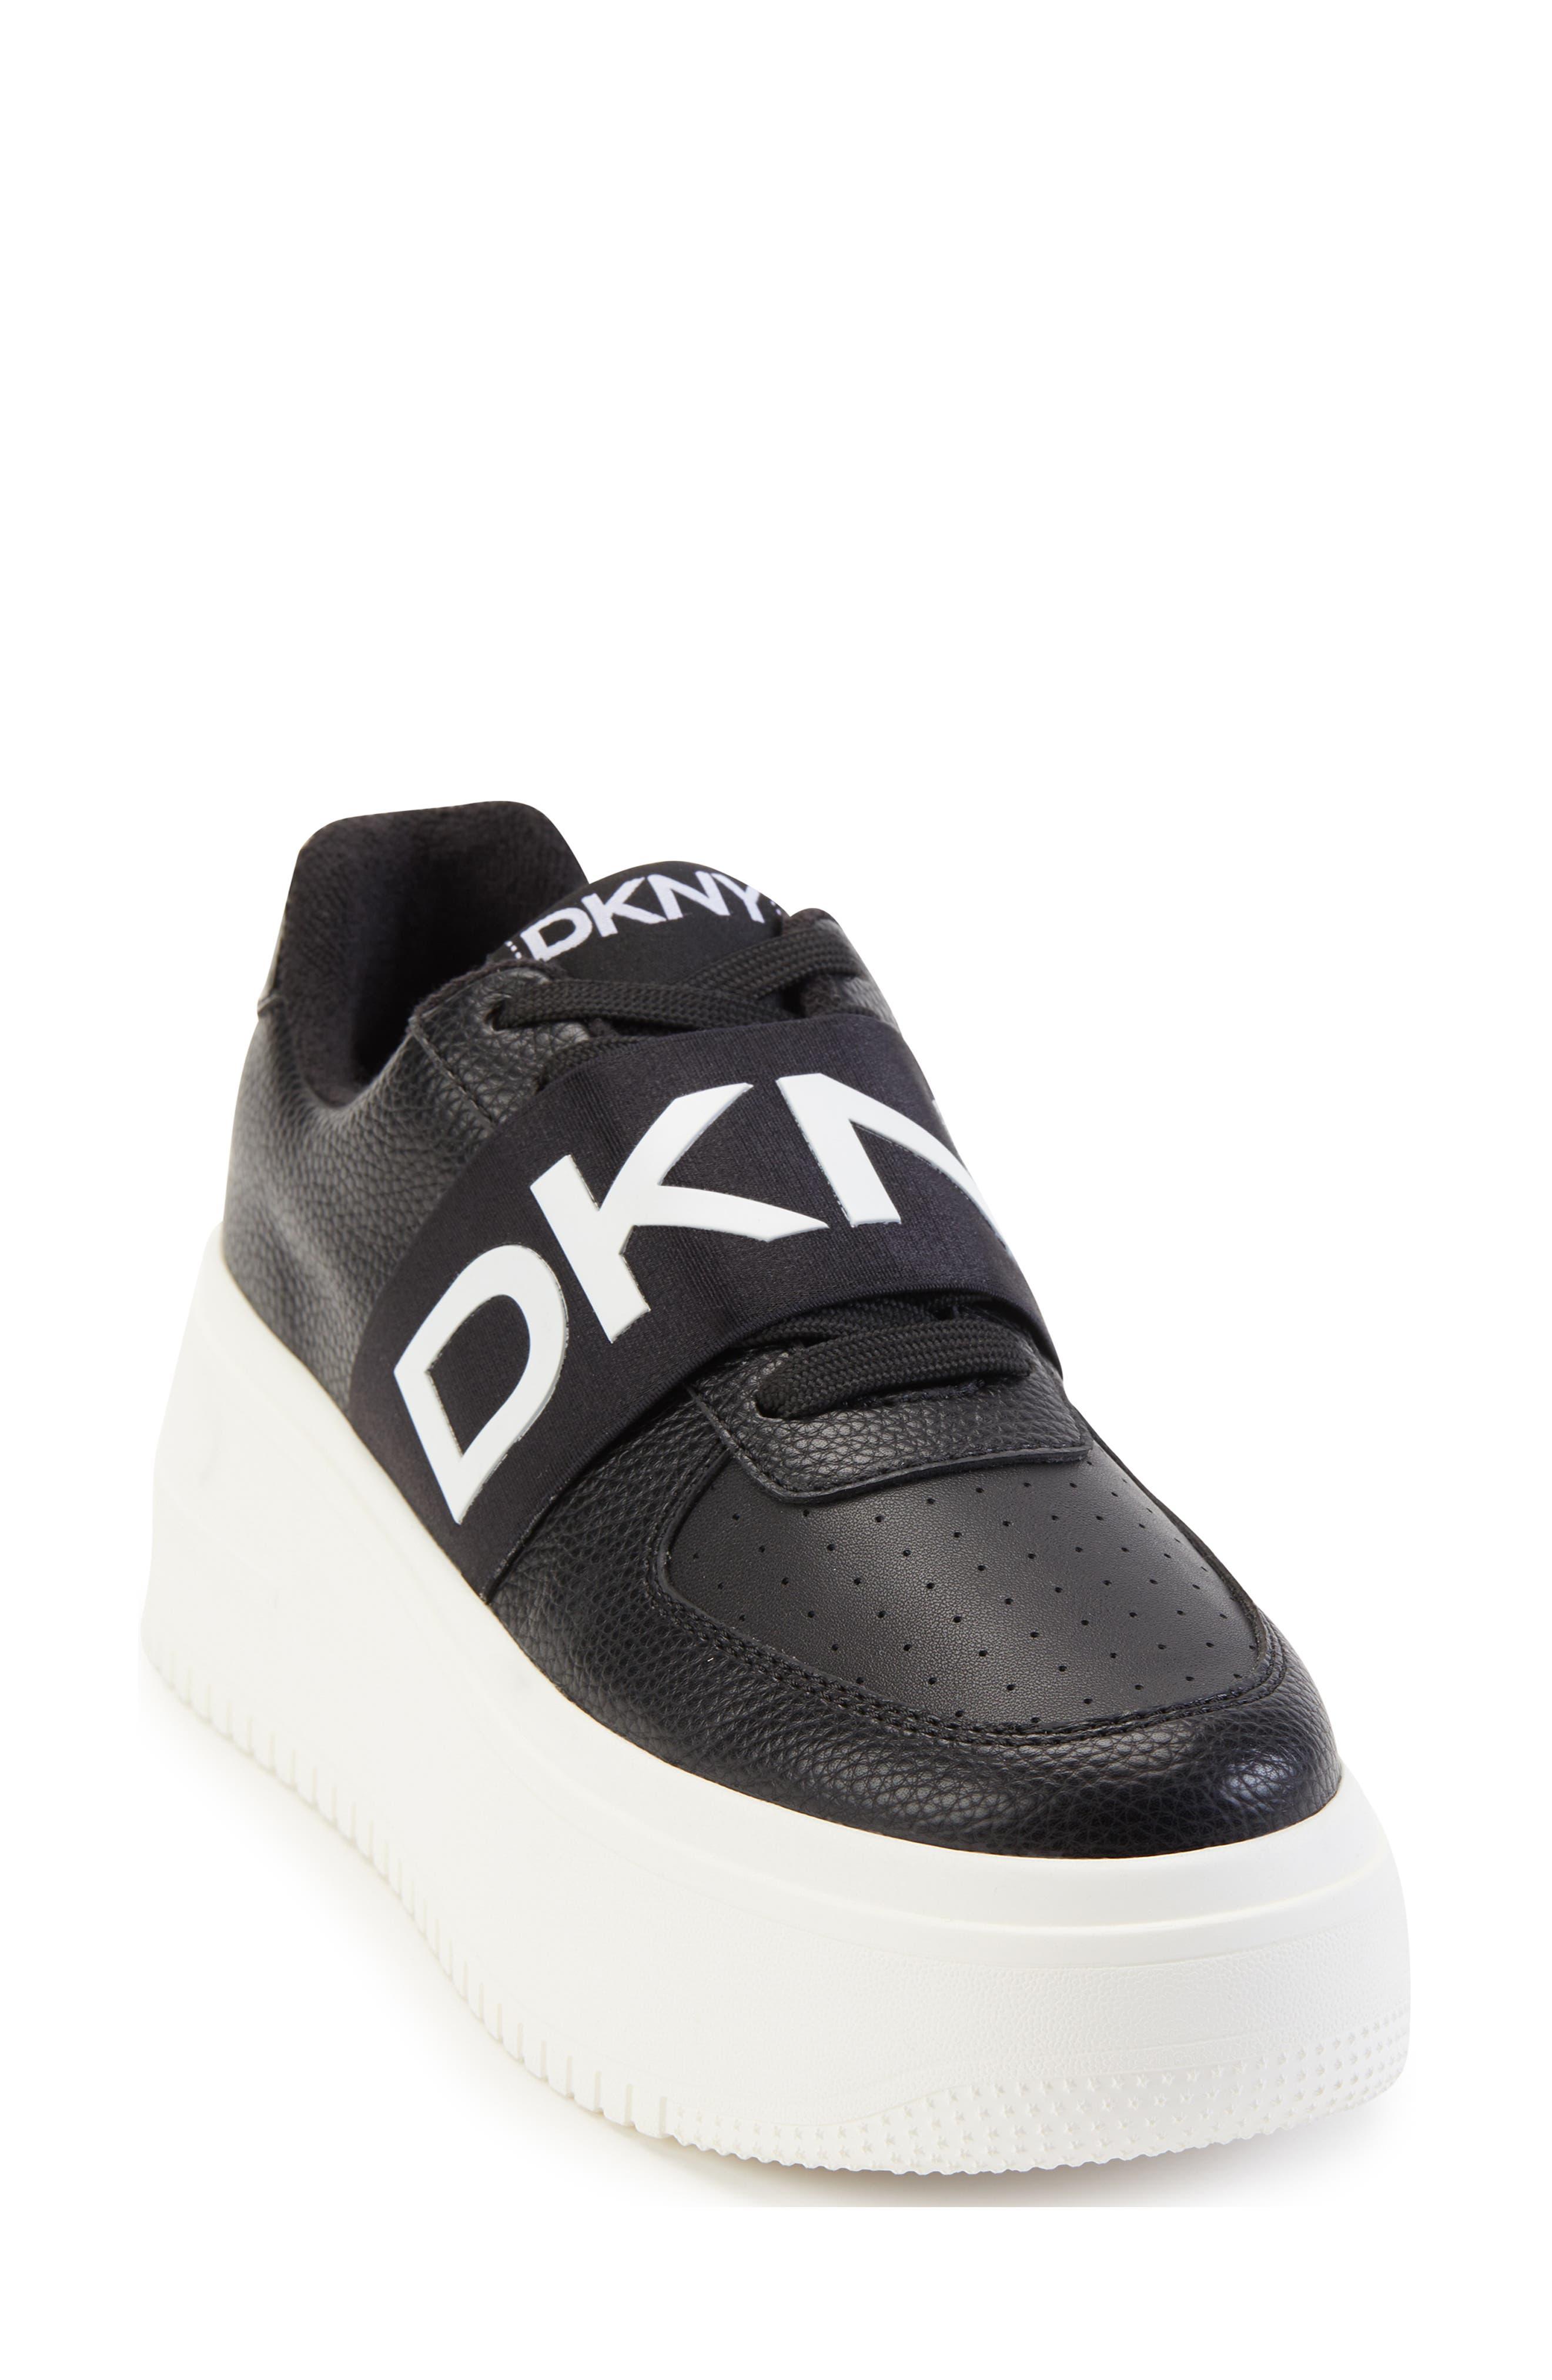 DKNY Madigan Platform Slip-on Sneaker in Black | Lyst